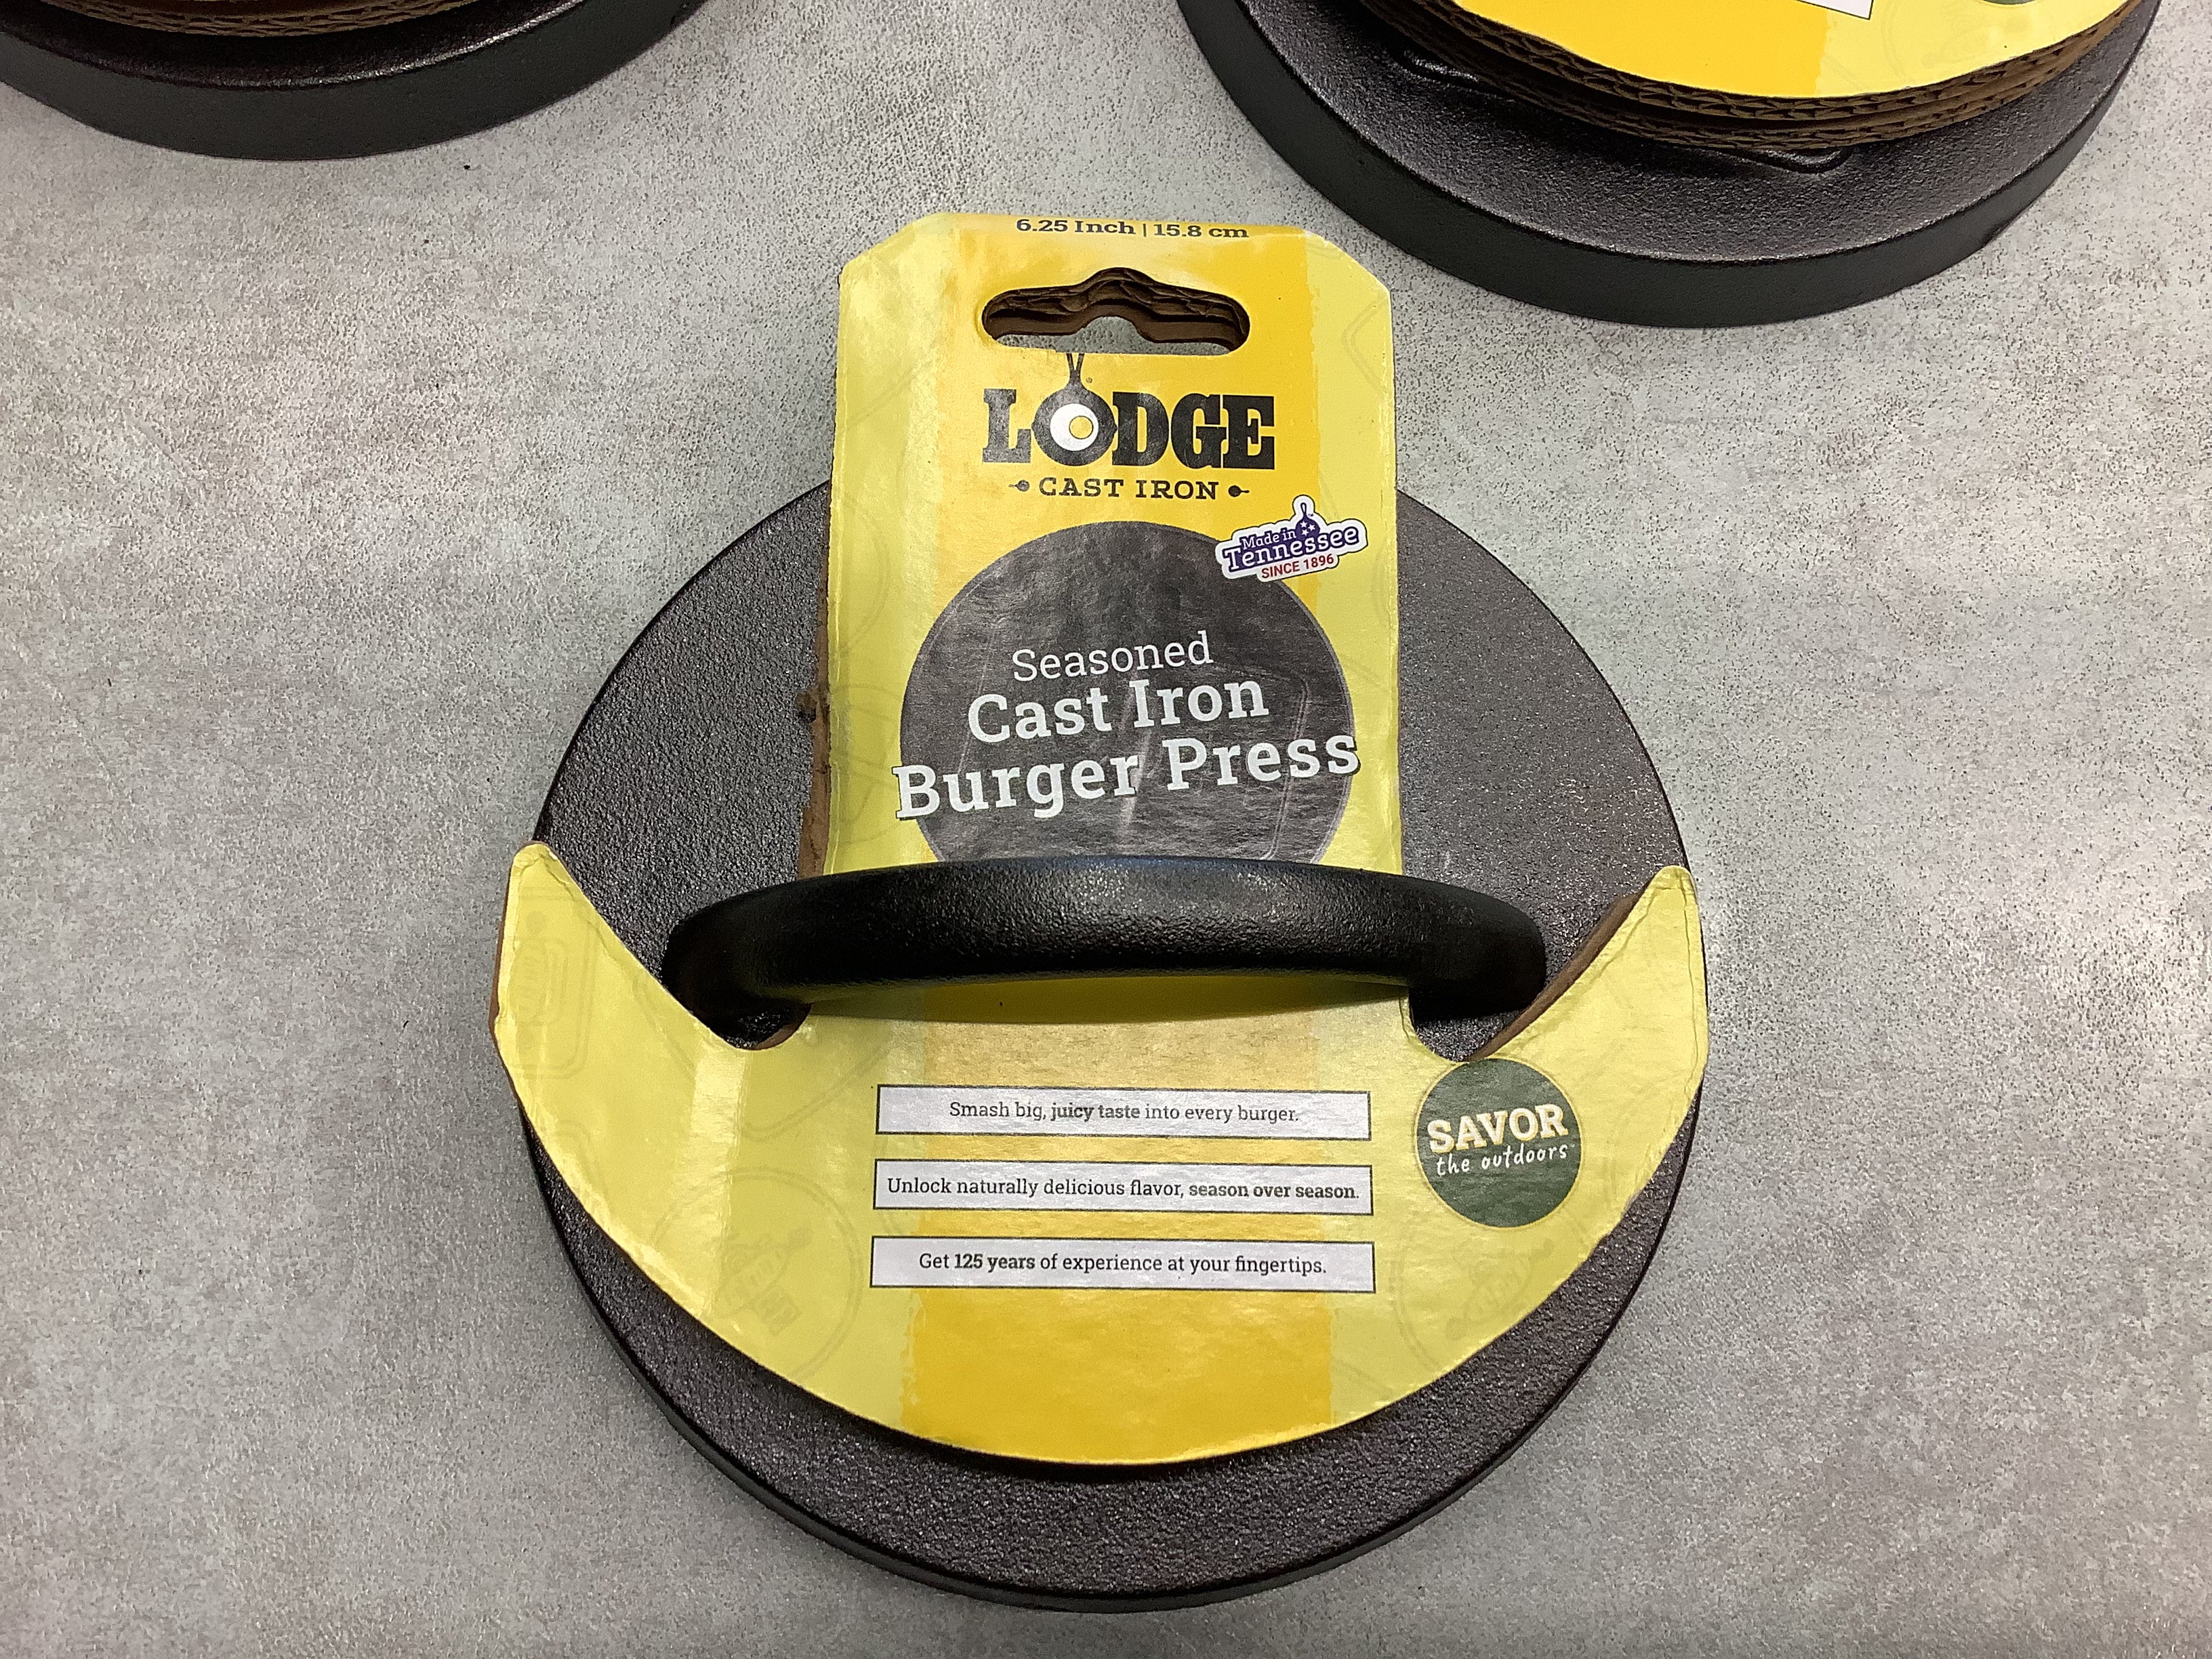 Lodge - Seasoned Cast Iron Burger Press 6.25